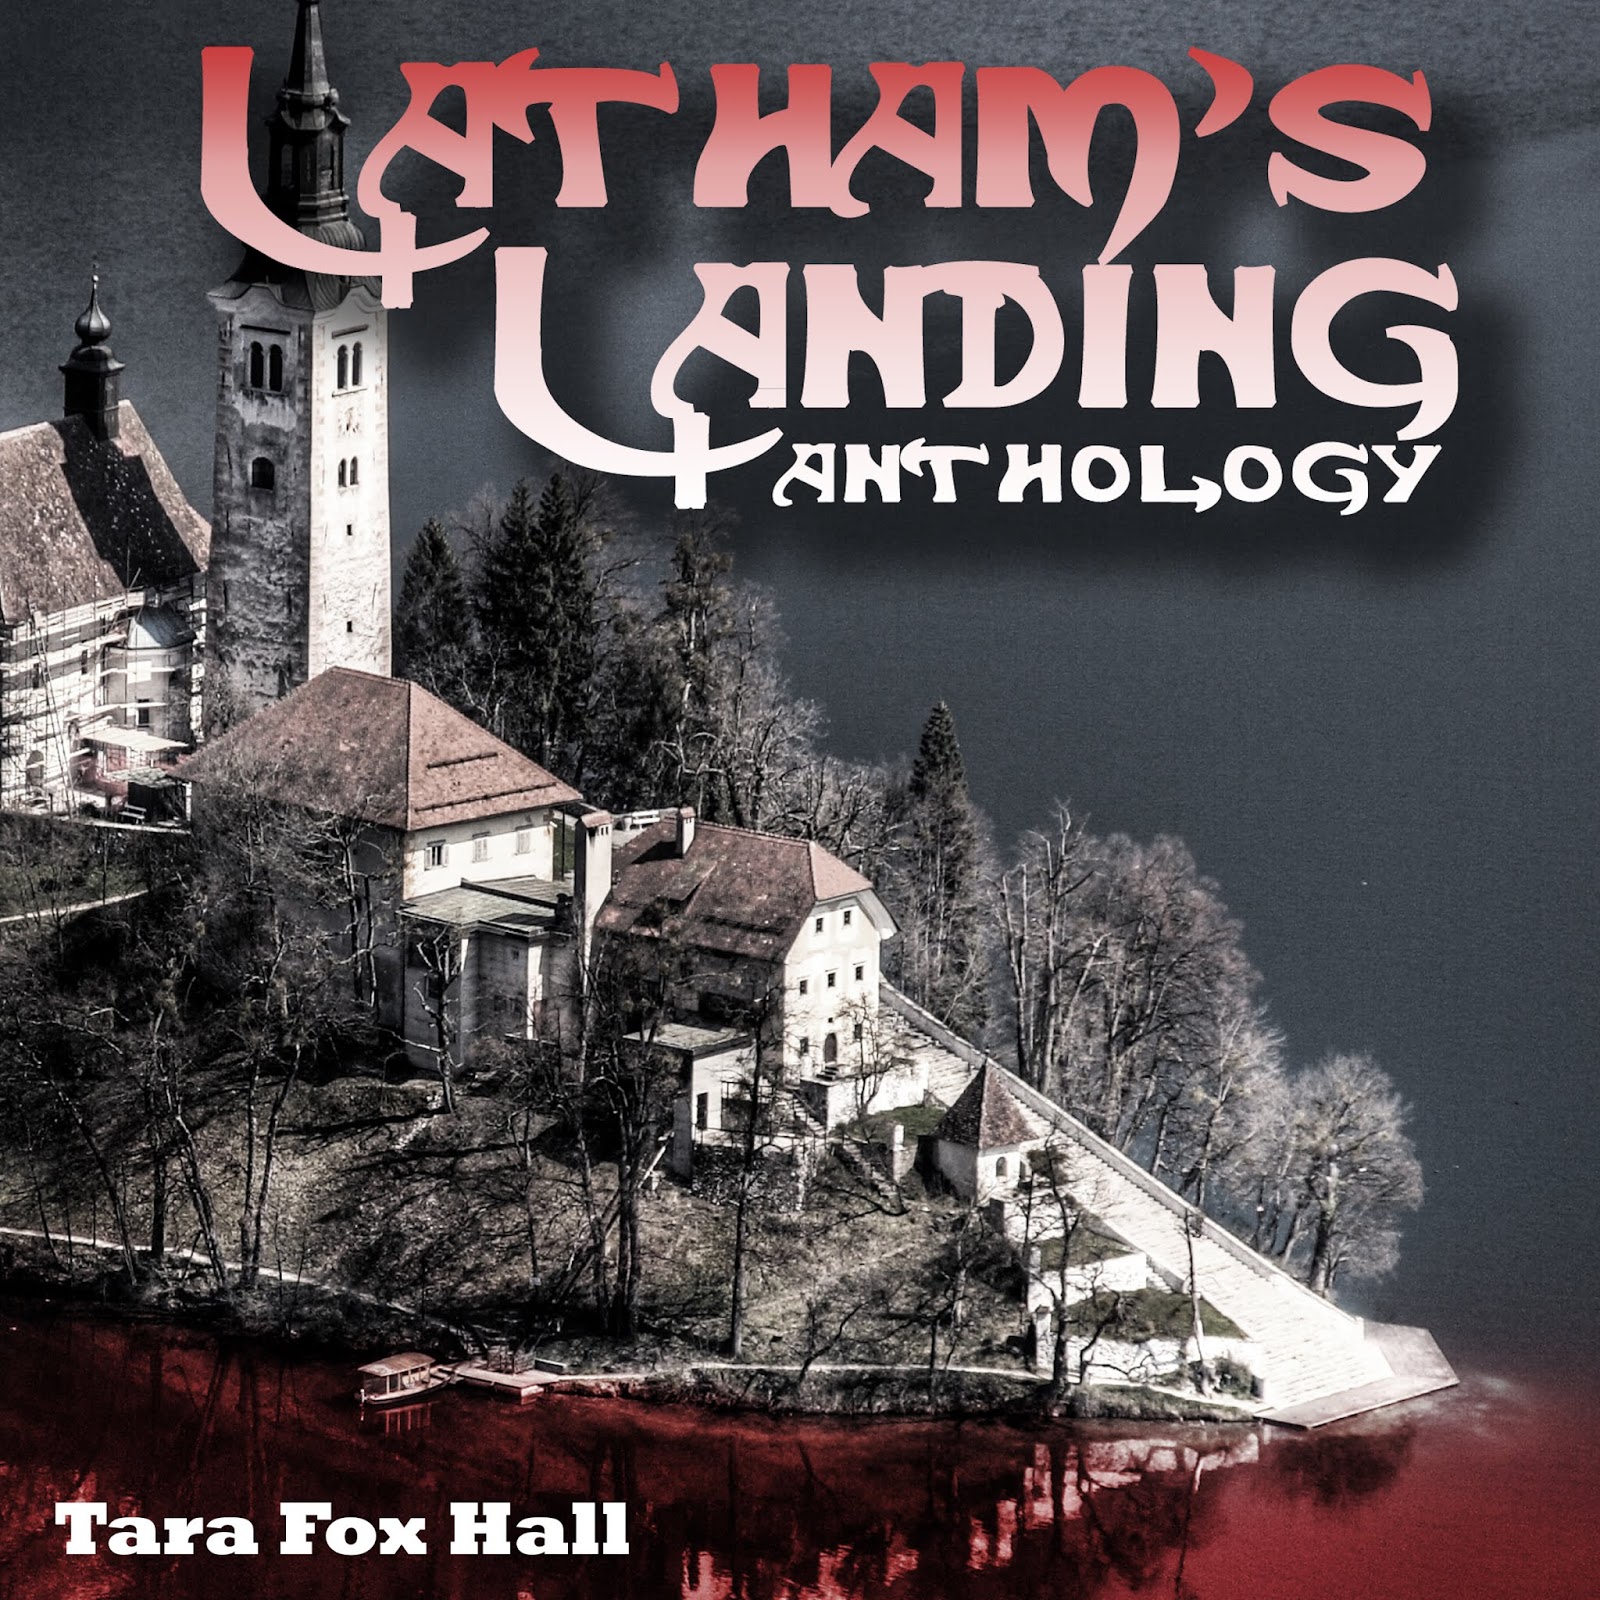 Tara fox. Фокс Холл игра. Fox Hall. Foxhall игра. Land Anthology.